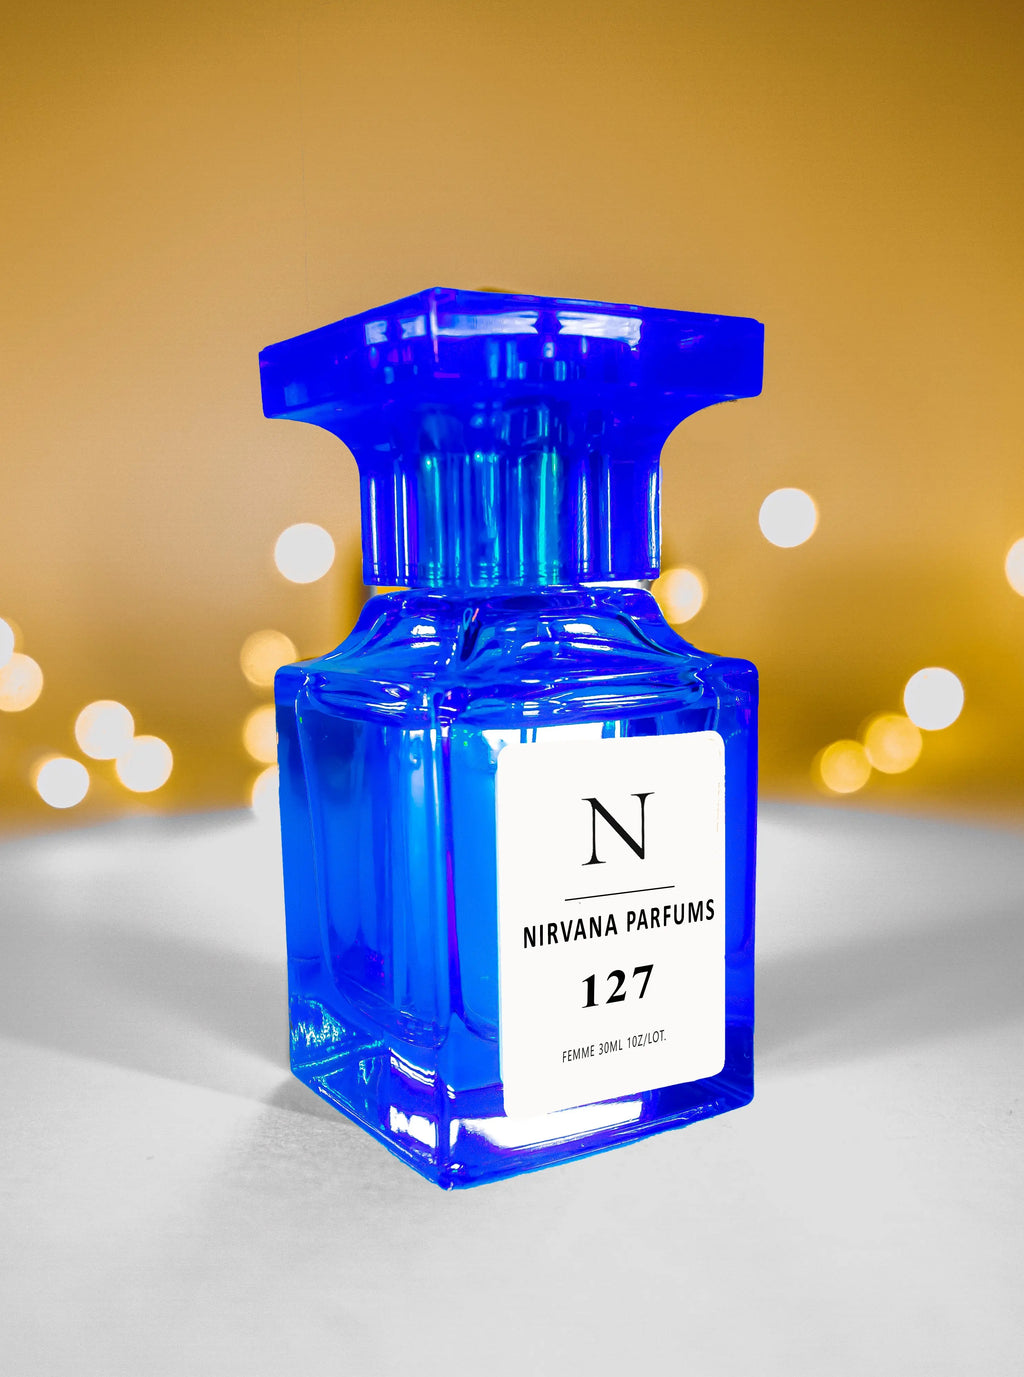 NIRVANA 127 recuerda a Devotion pack 30 ml nirvanaparfums.equivalencia